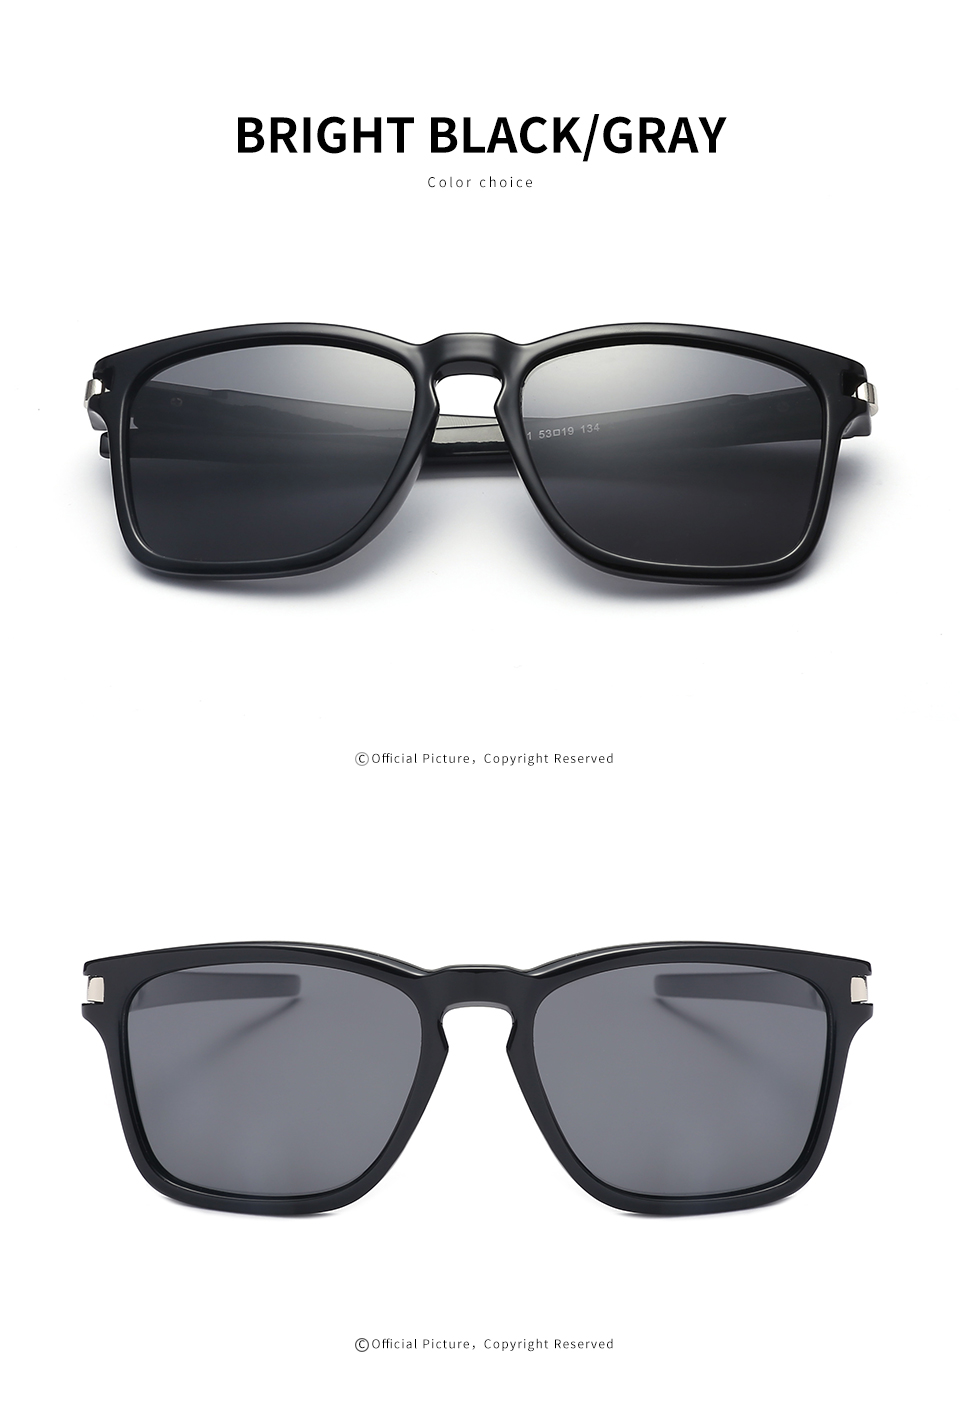 Polarized Wholesale Sunglasses - Best Sunglasses Polarized for Sport